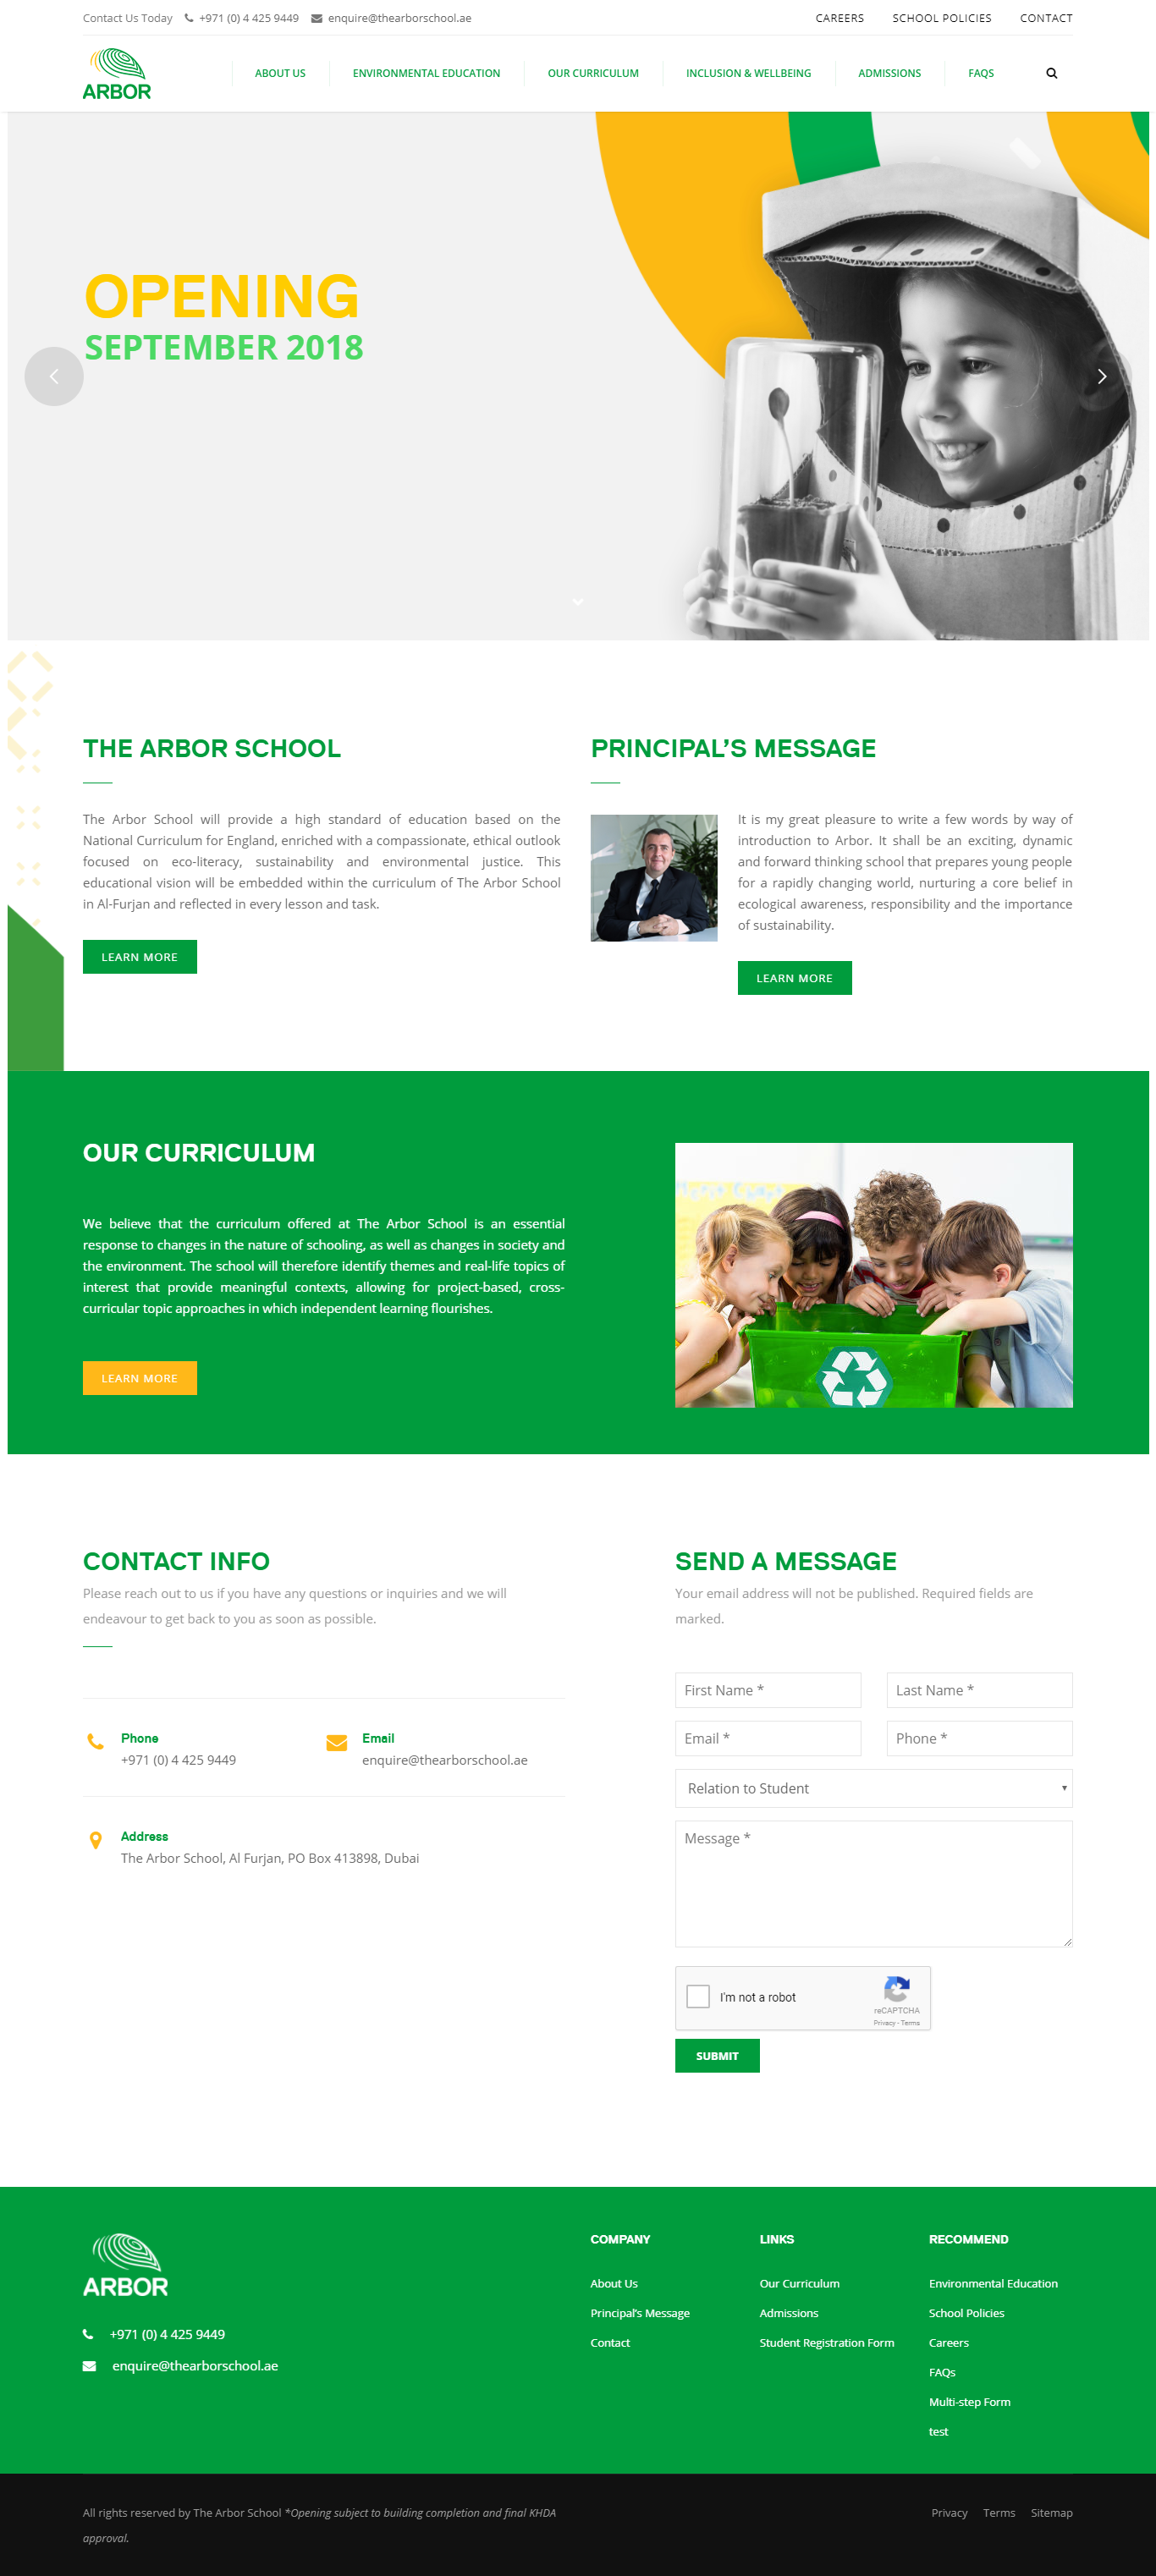 The Arbor School Website by Nexa, Dubai.png